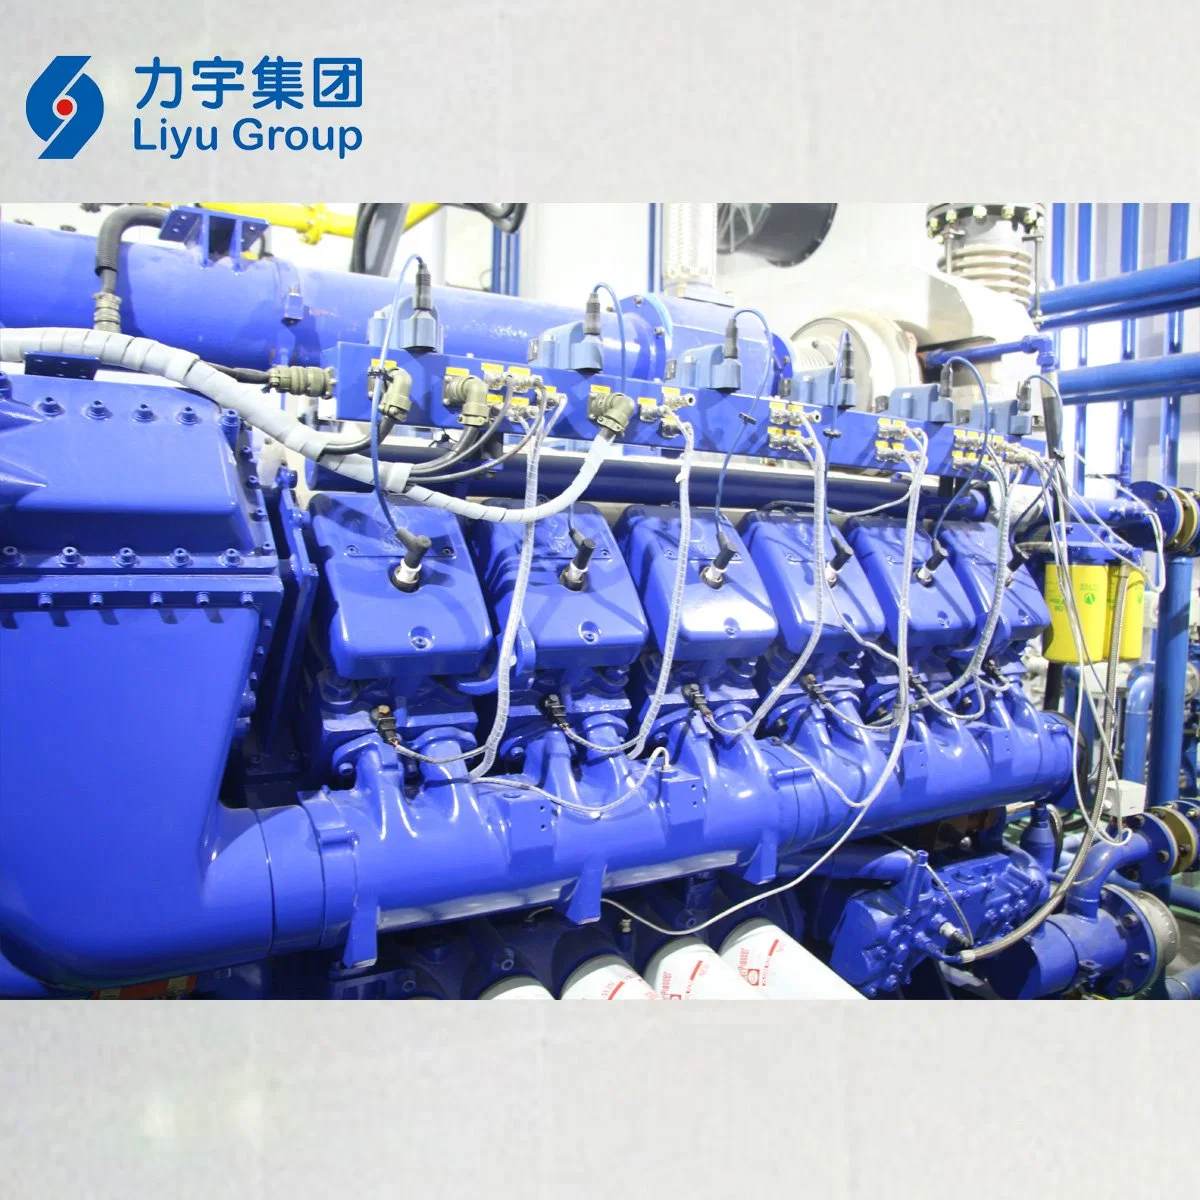 China Liyu 0.8MW/800kw LV Gas-Fired Internal Combustion Engine Energy Saving Biomass Gas Powerd Generation Set Manufacturer